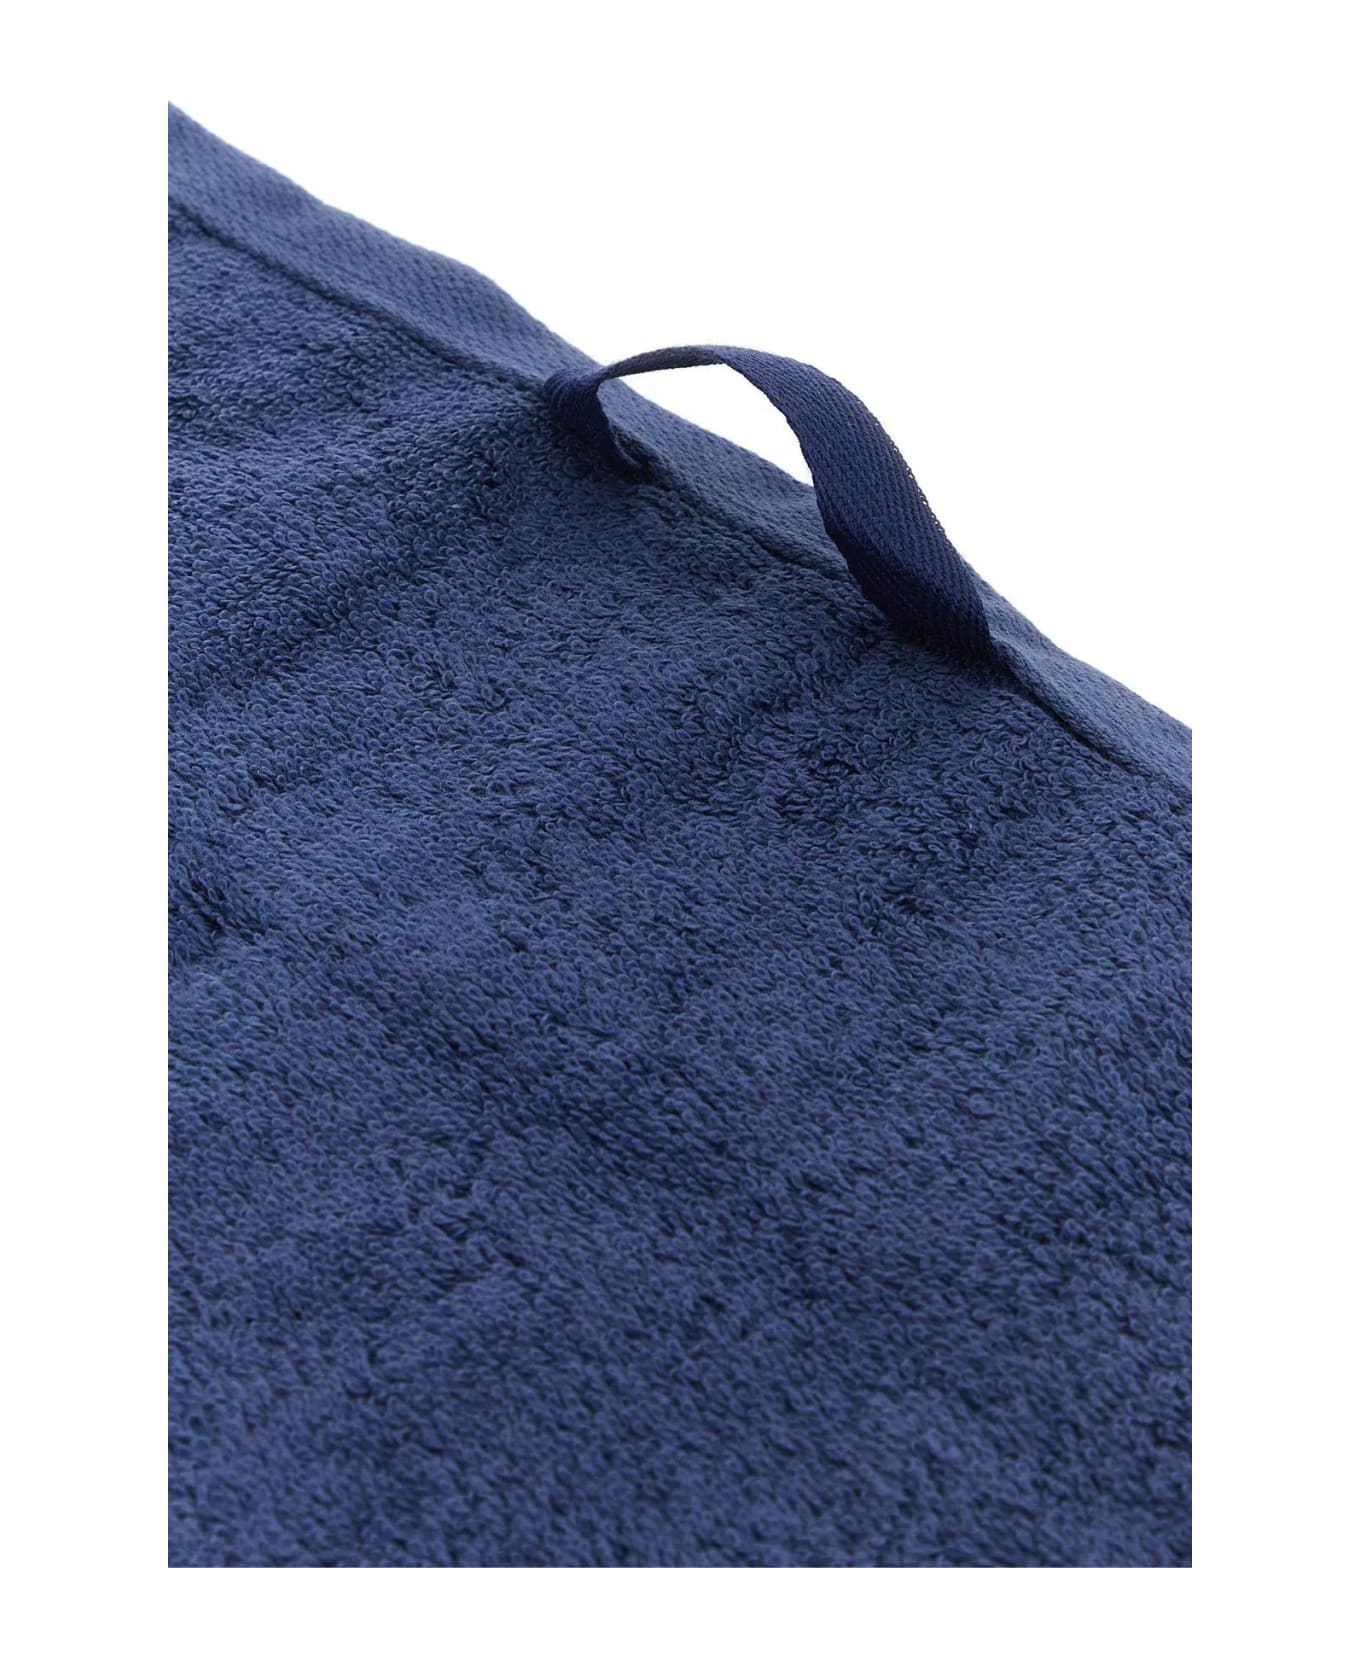 Tekla Air Force Blue Terry Towel - BLUE